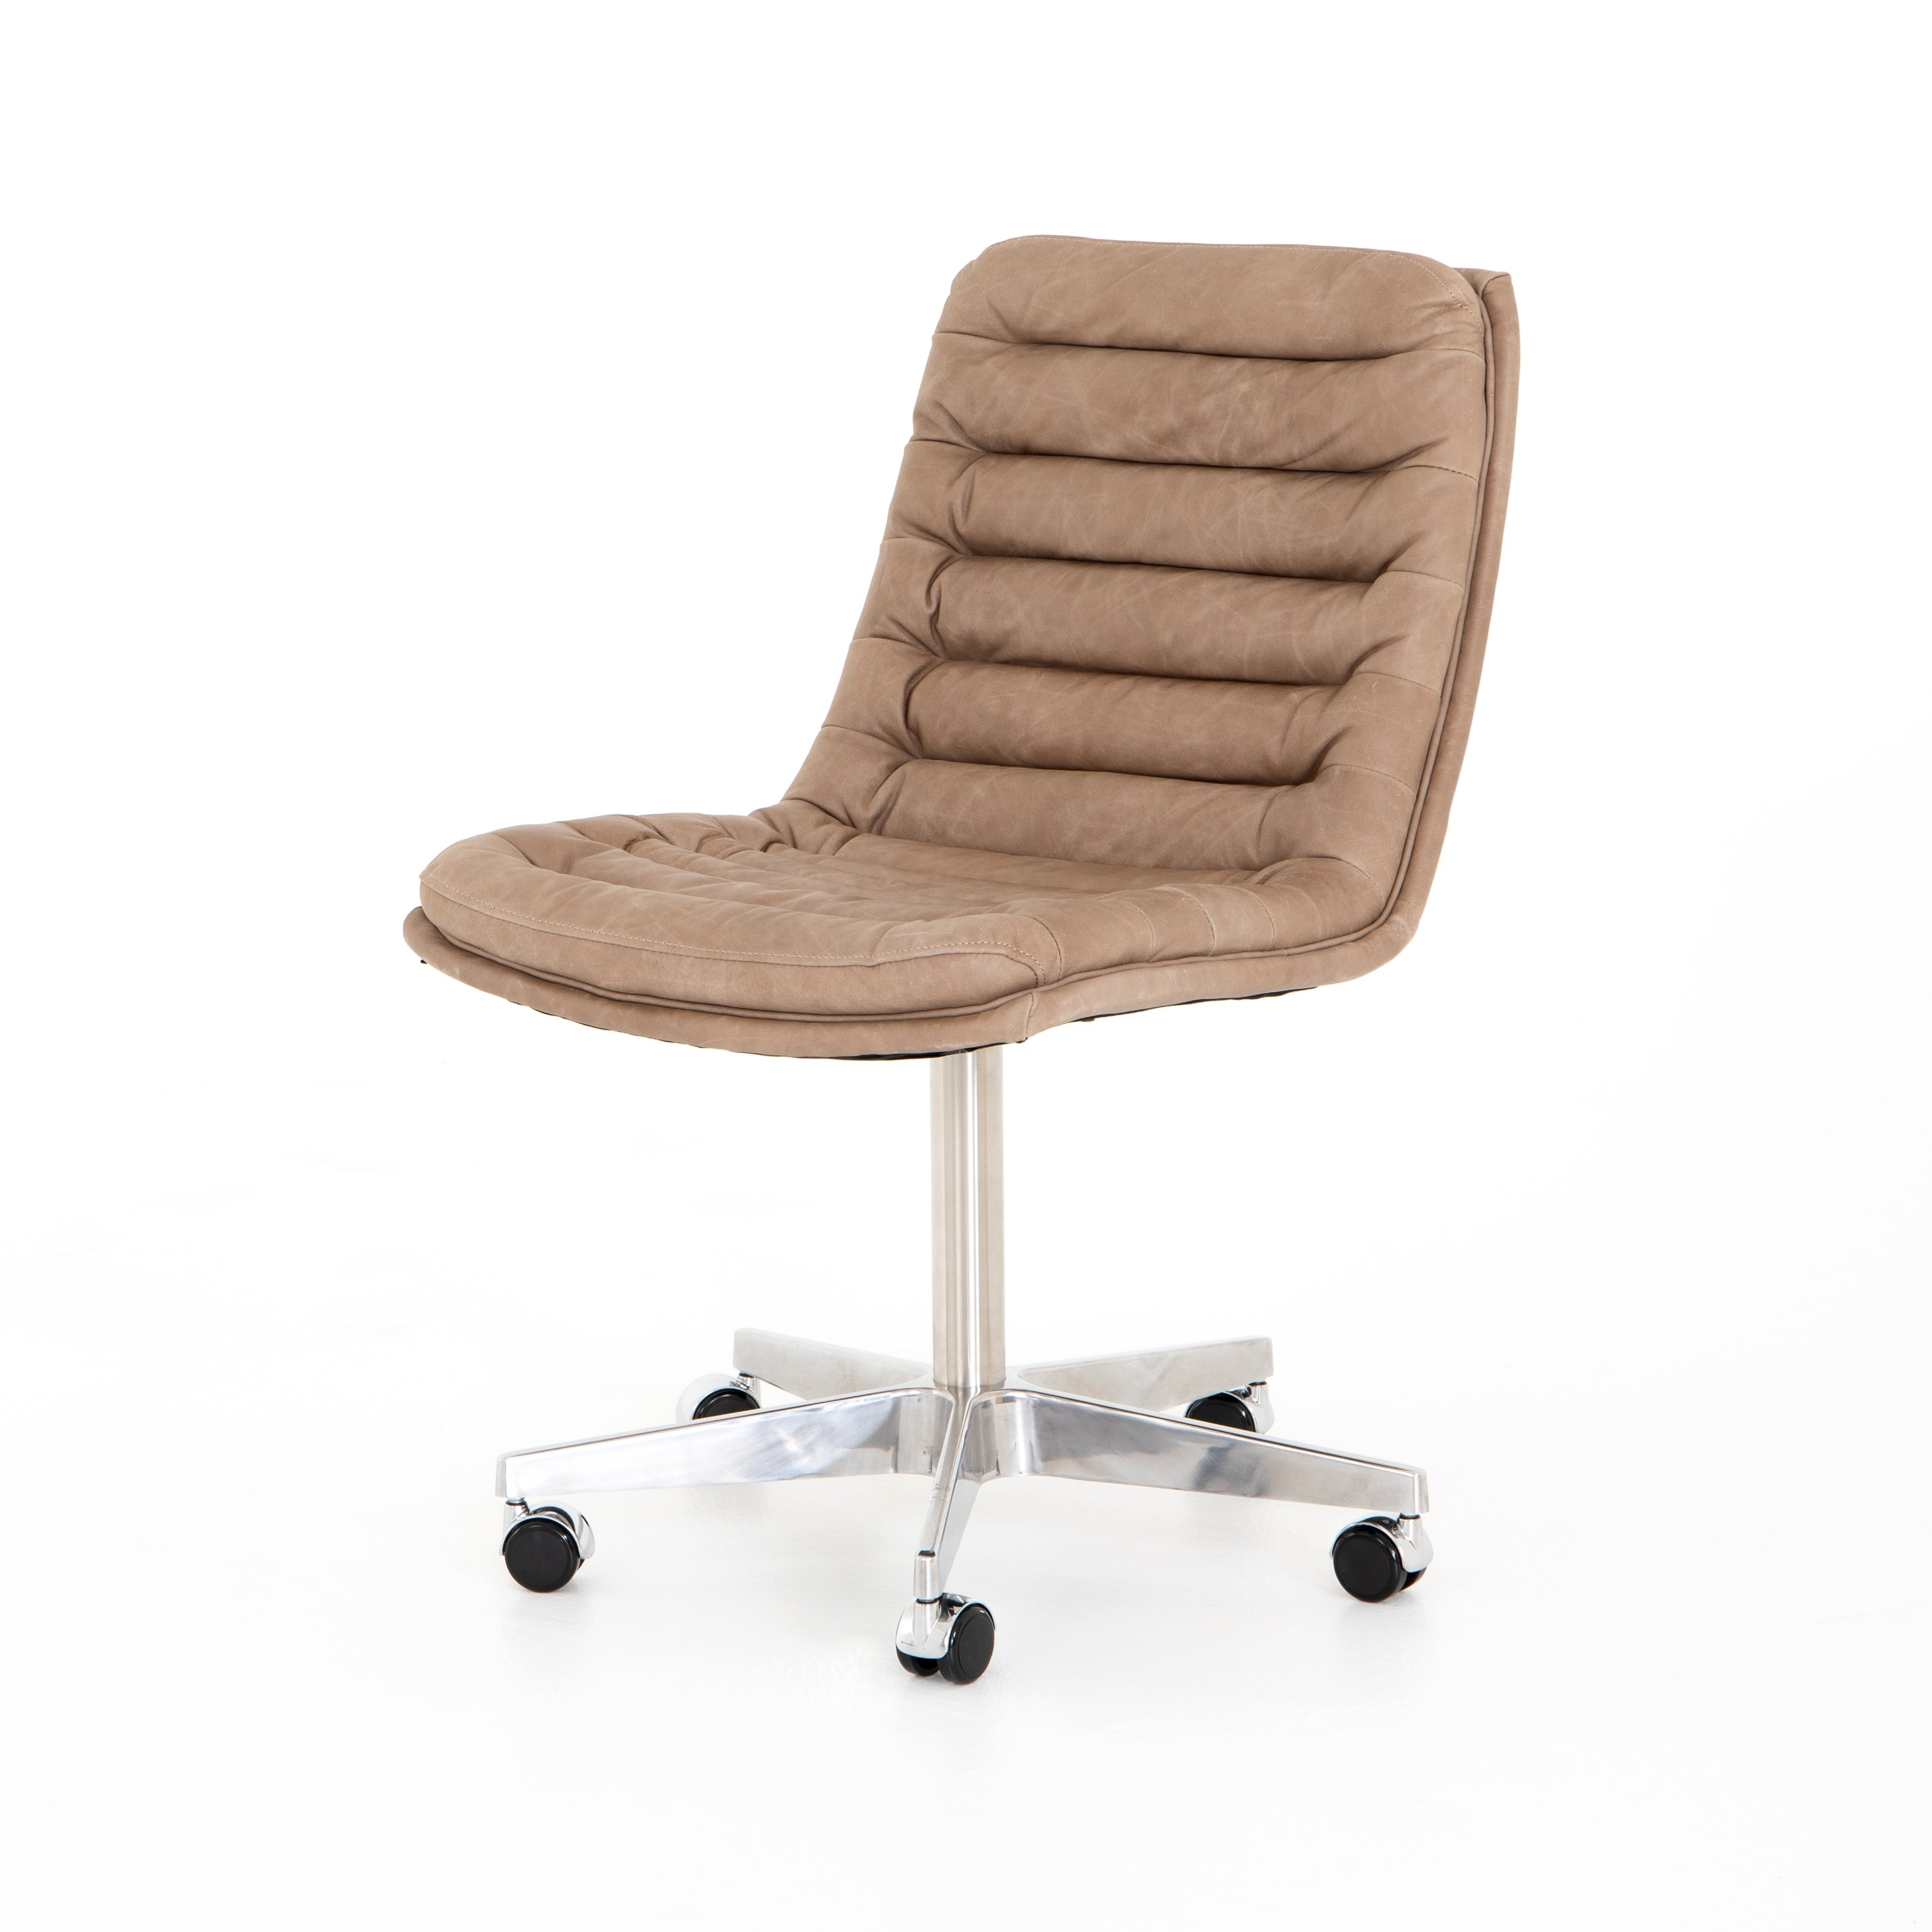 Malibu Desk Chair-Natural Wash Mushroom - Image 0